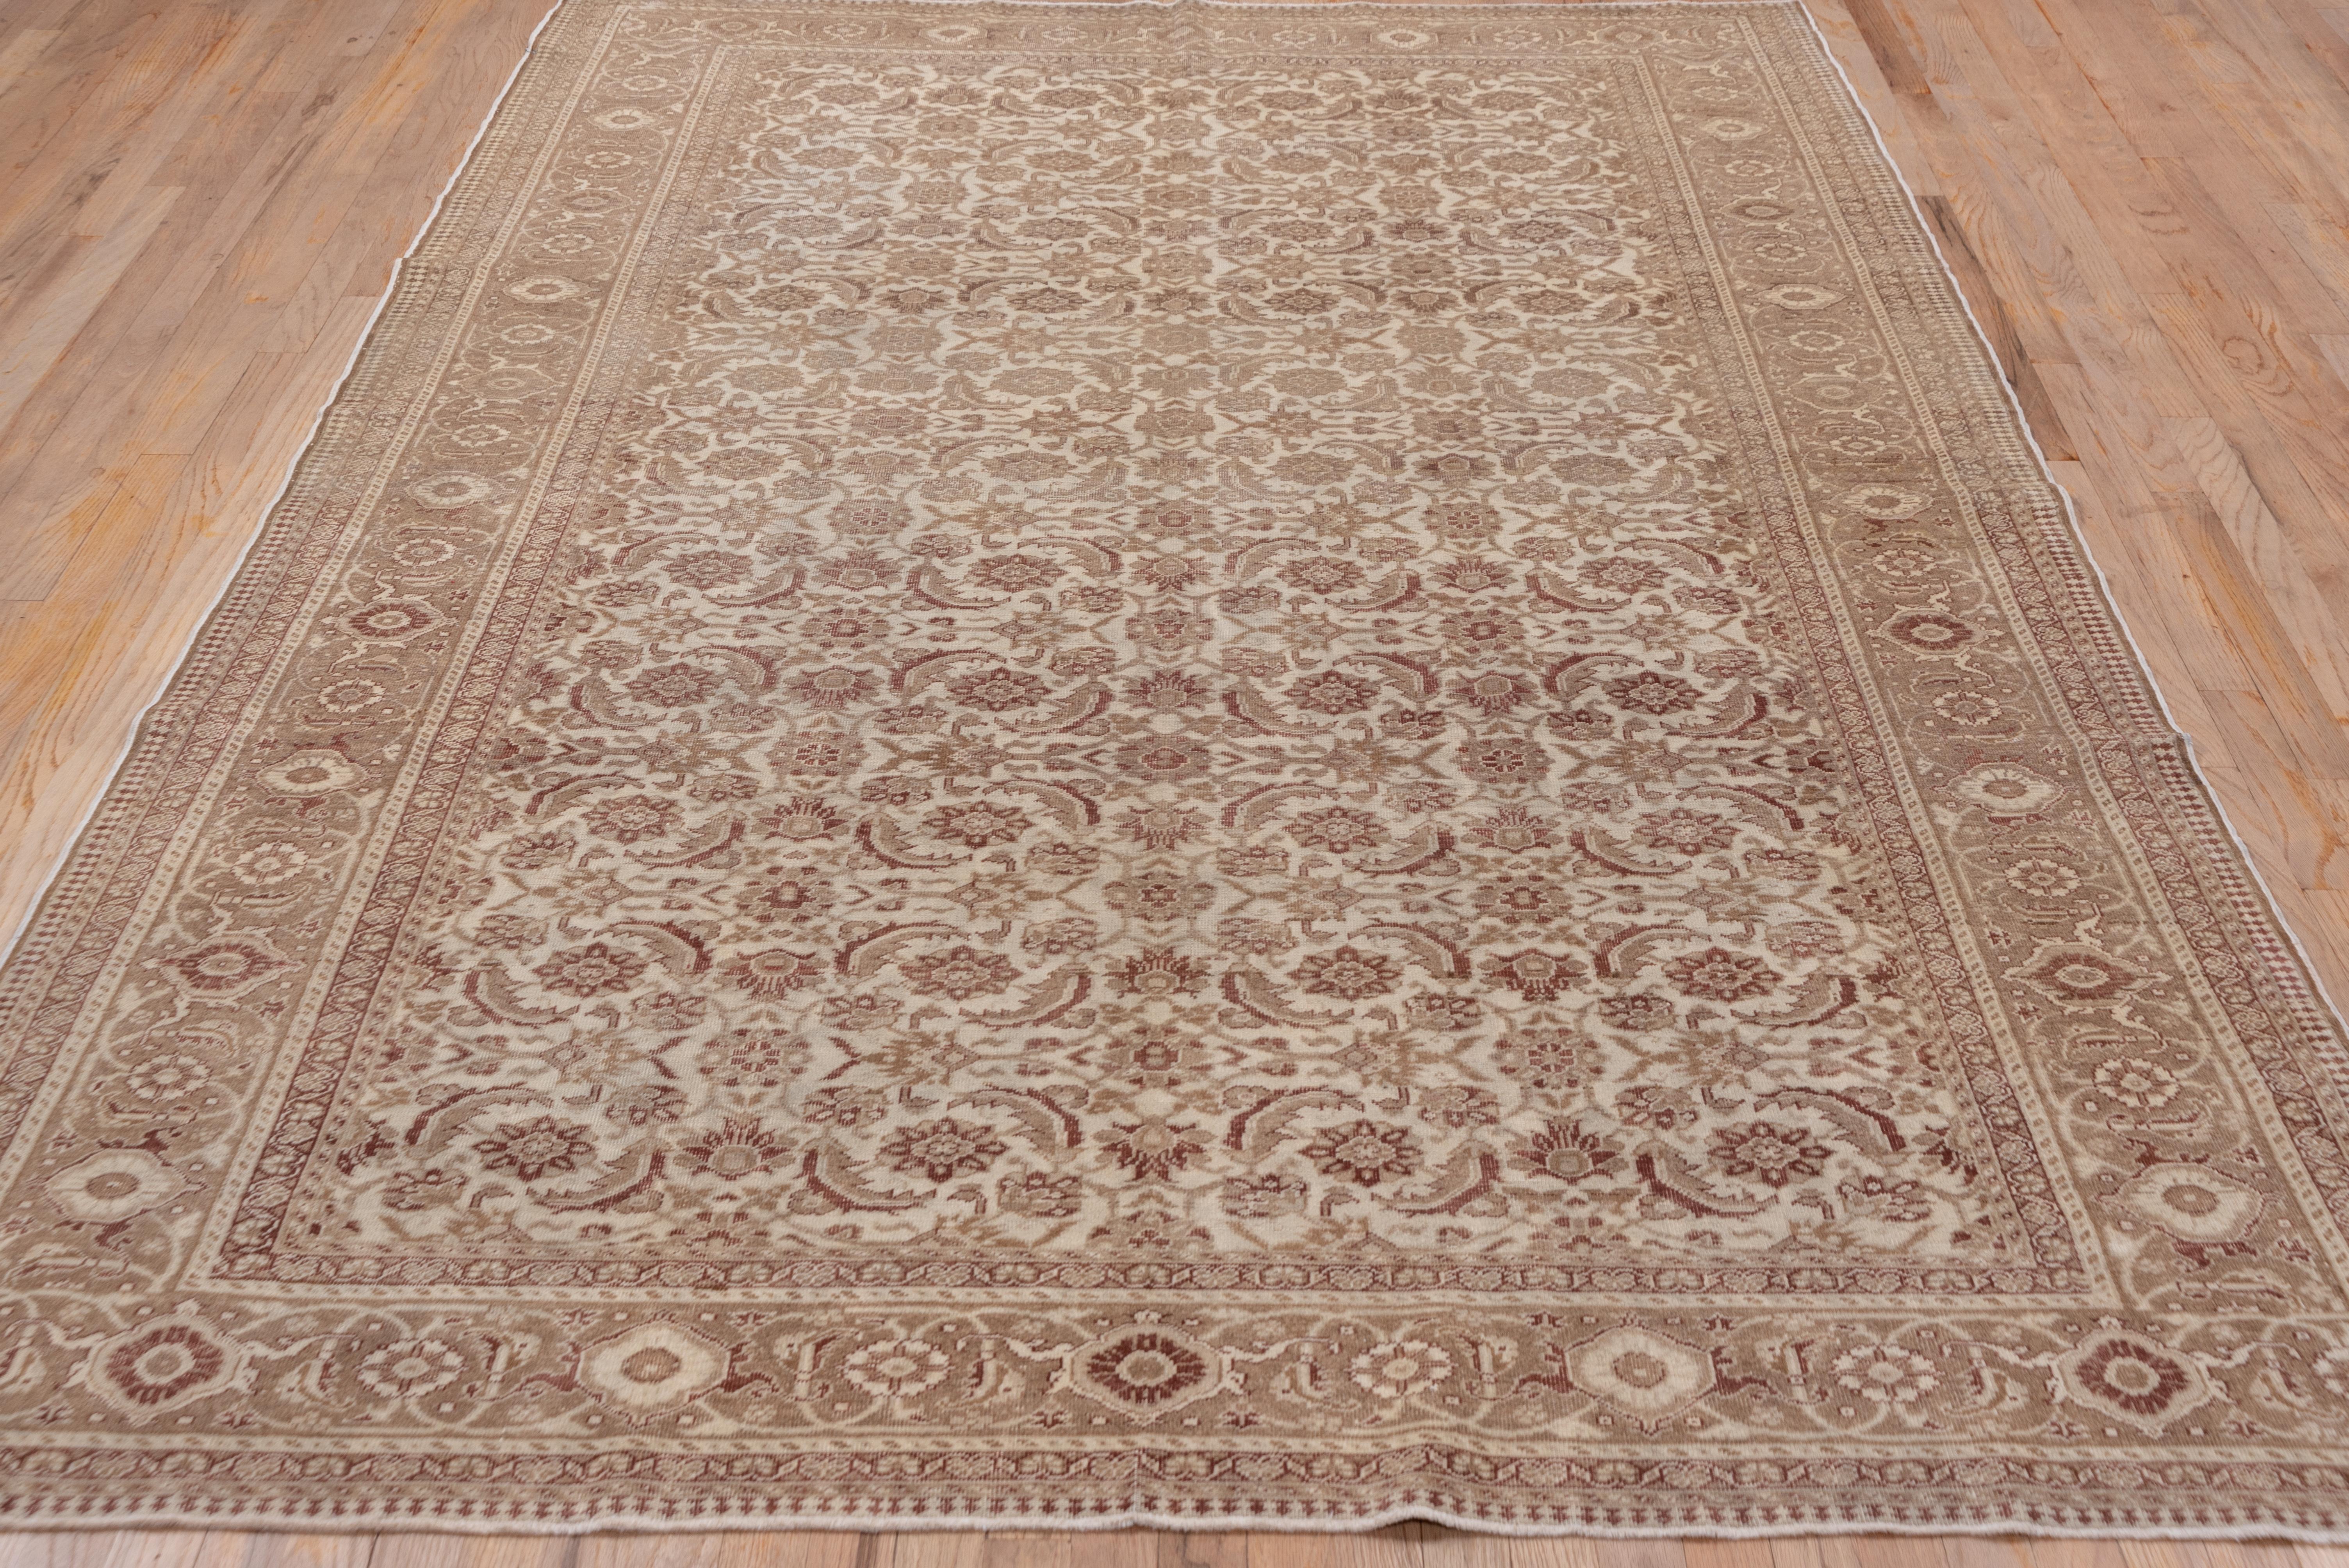 Tribal Antique Kaisary Carpet, Neutral Palette, circa 1920s